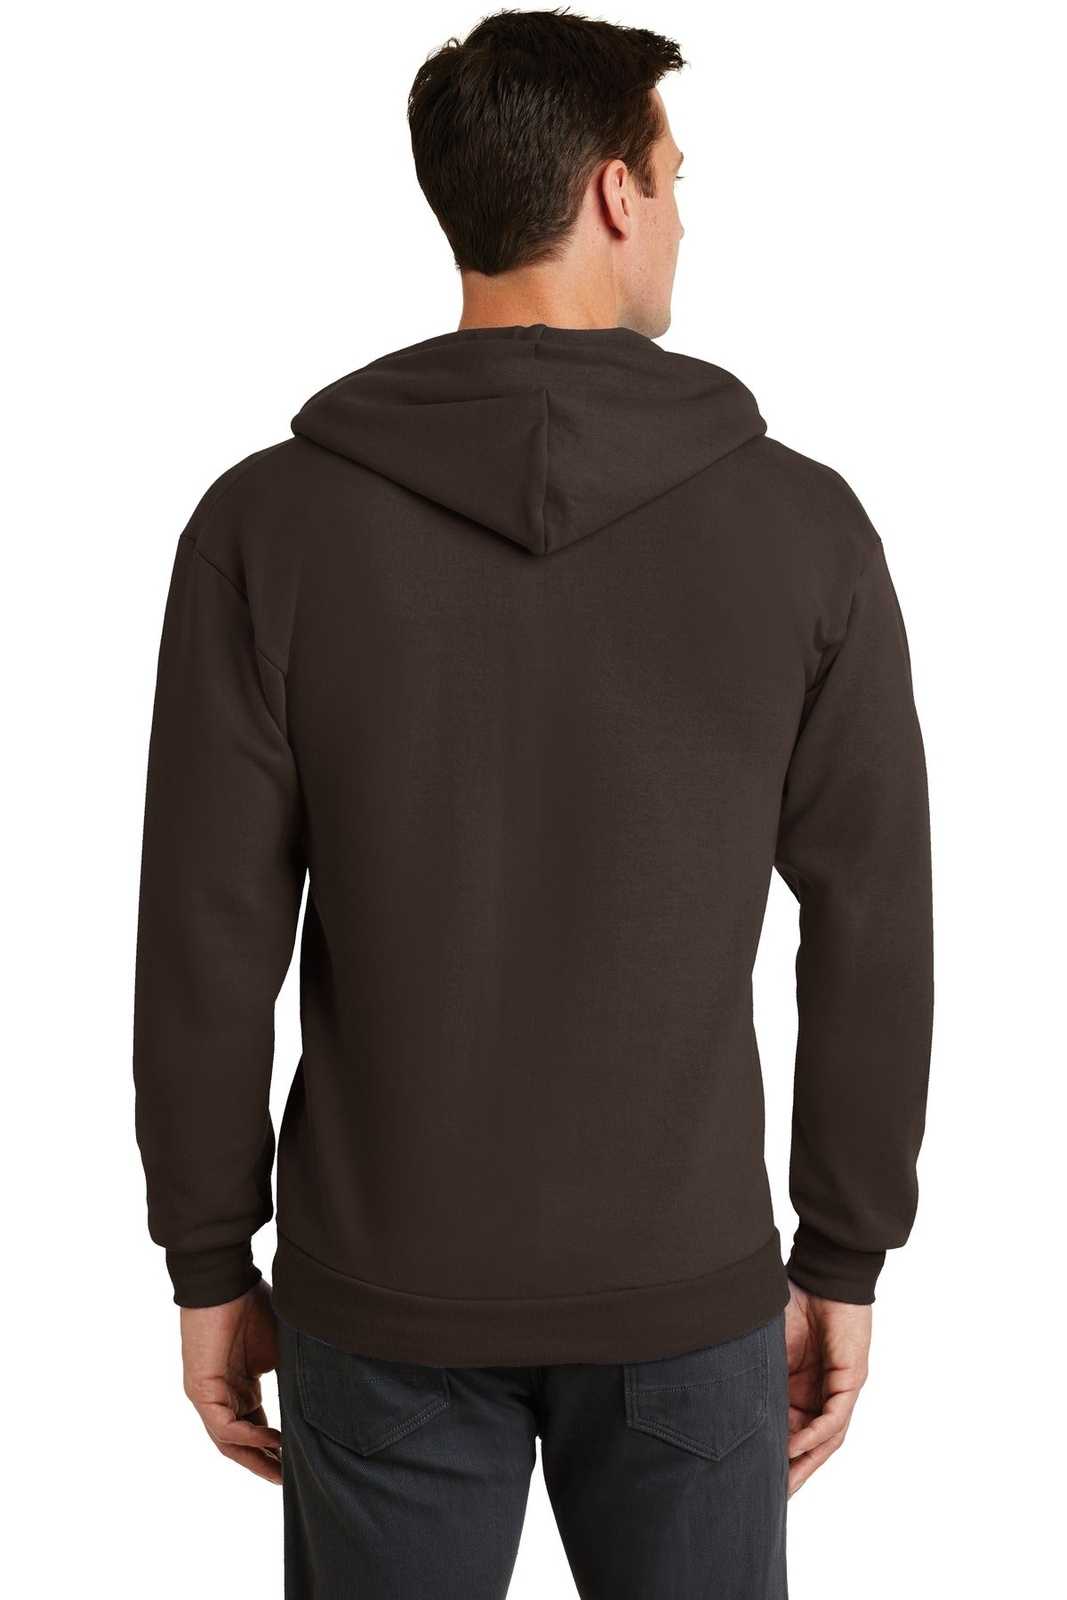 Port &amp; Company PC78ZH Core Fleece Full-Zip Hooded Sweatshirt - Dark Chocolate Brown - HIT a Double - 2